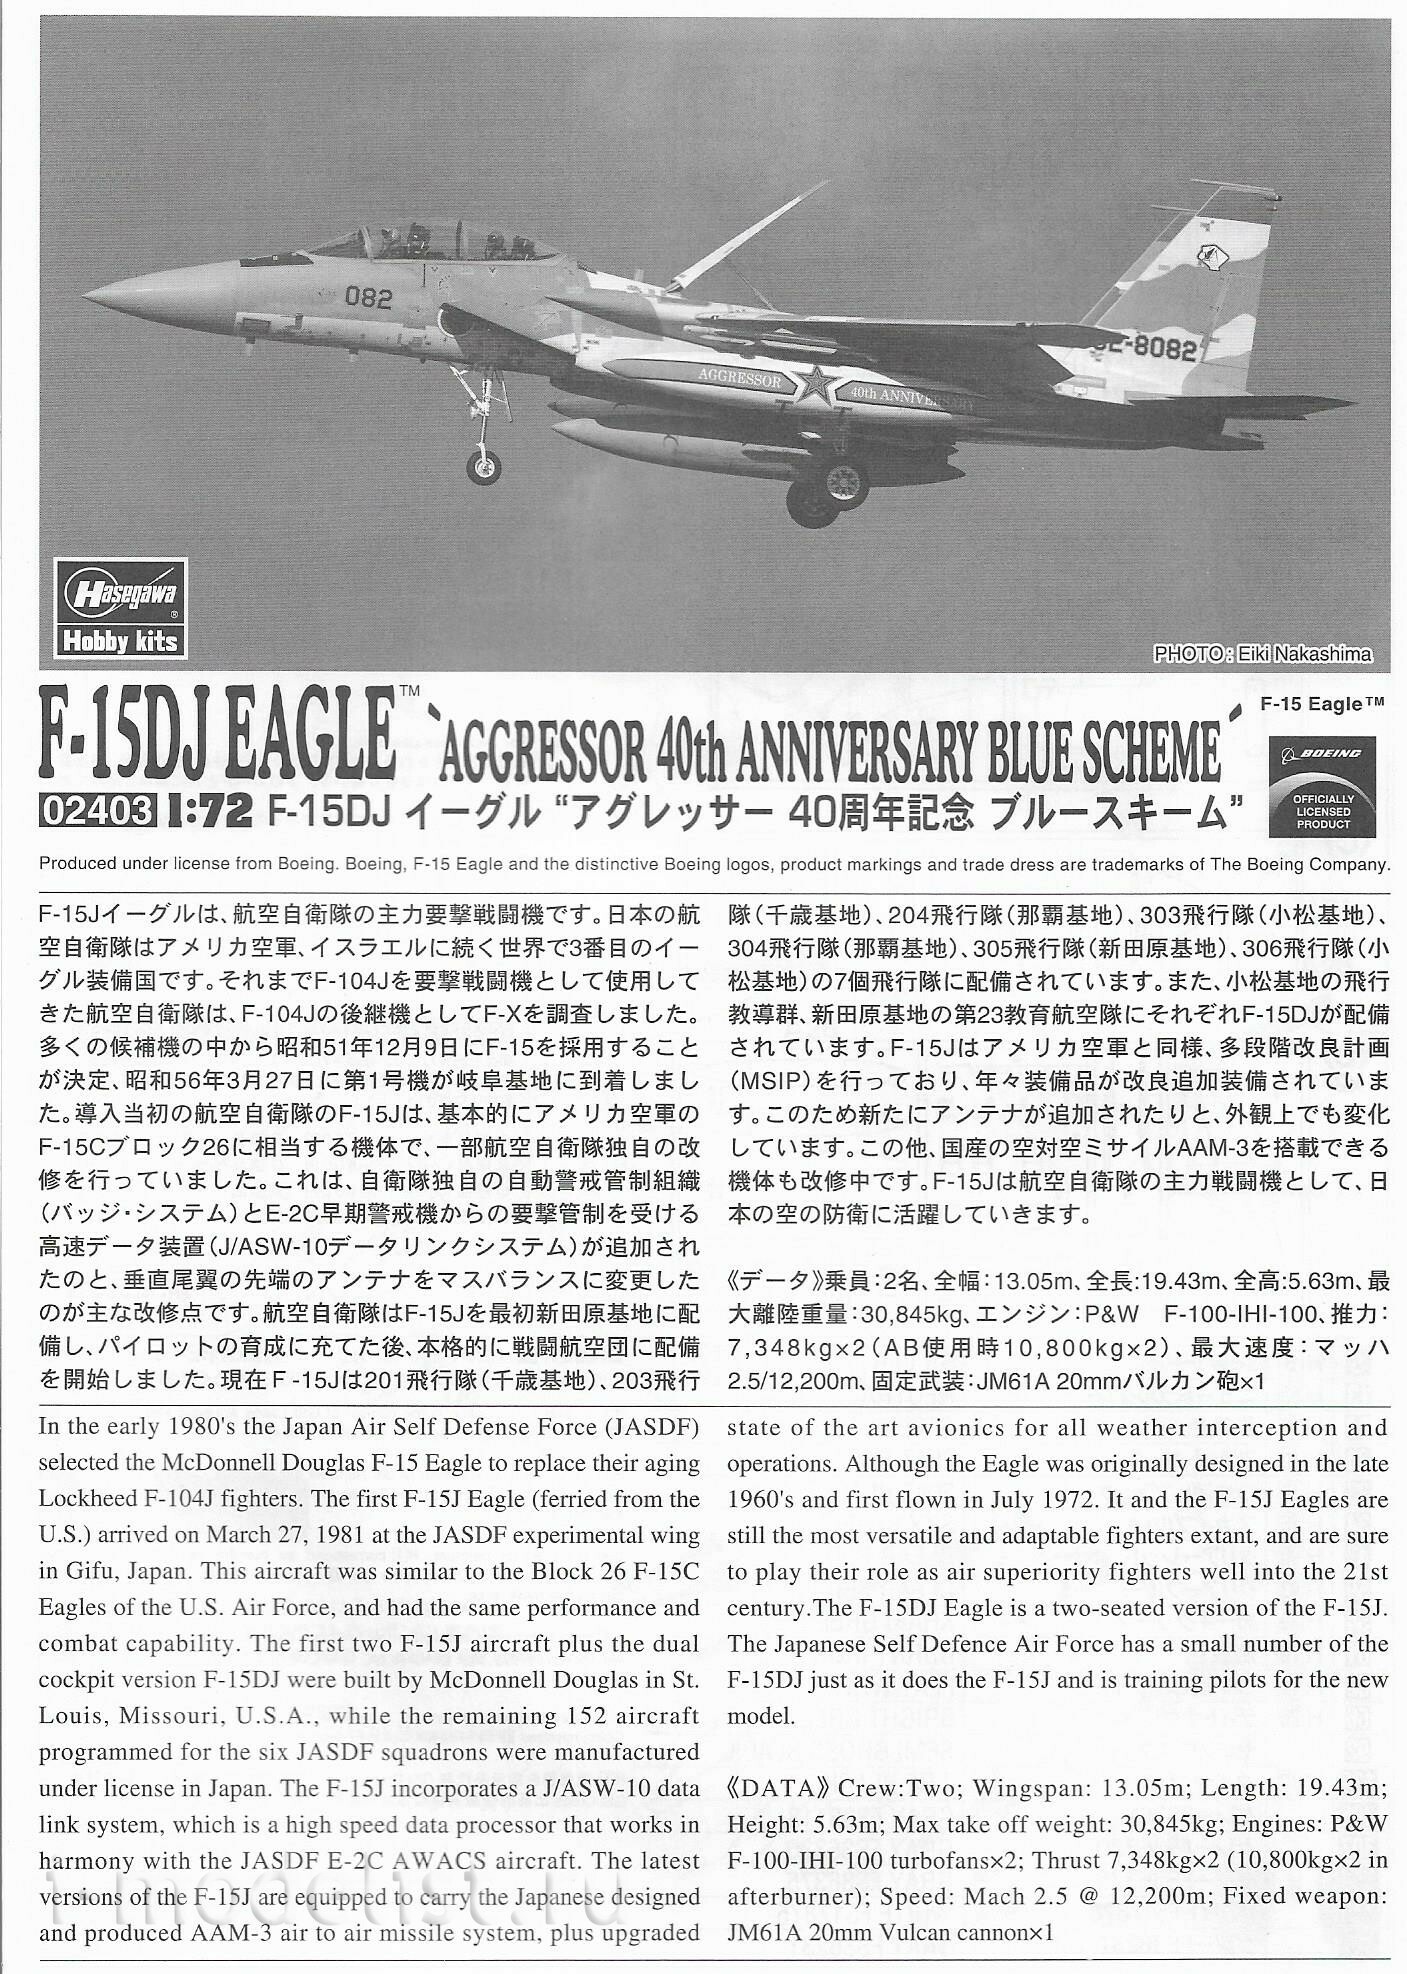 02403 Hasegawa 1/72 Истребитель ВВС Японии F-15DJ Eagle 'Agressor 40th Anniversary Blue Scheme' (Limited Edition)